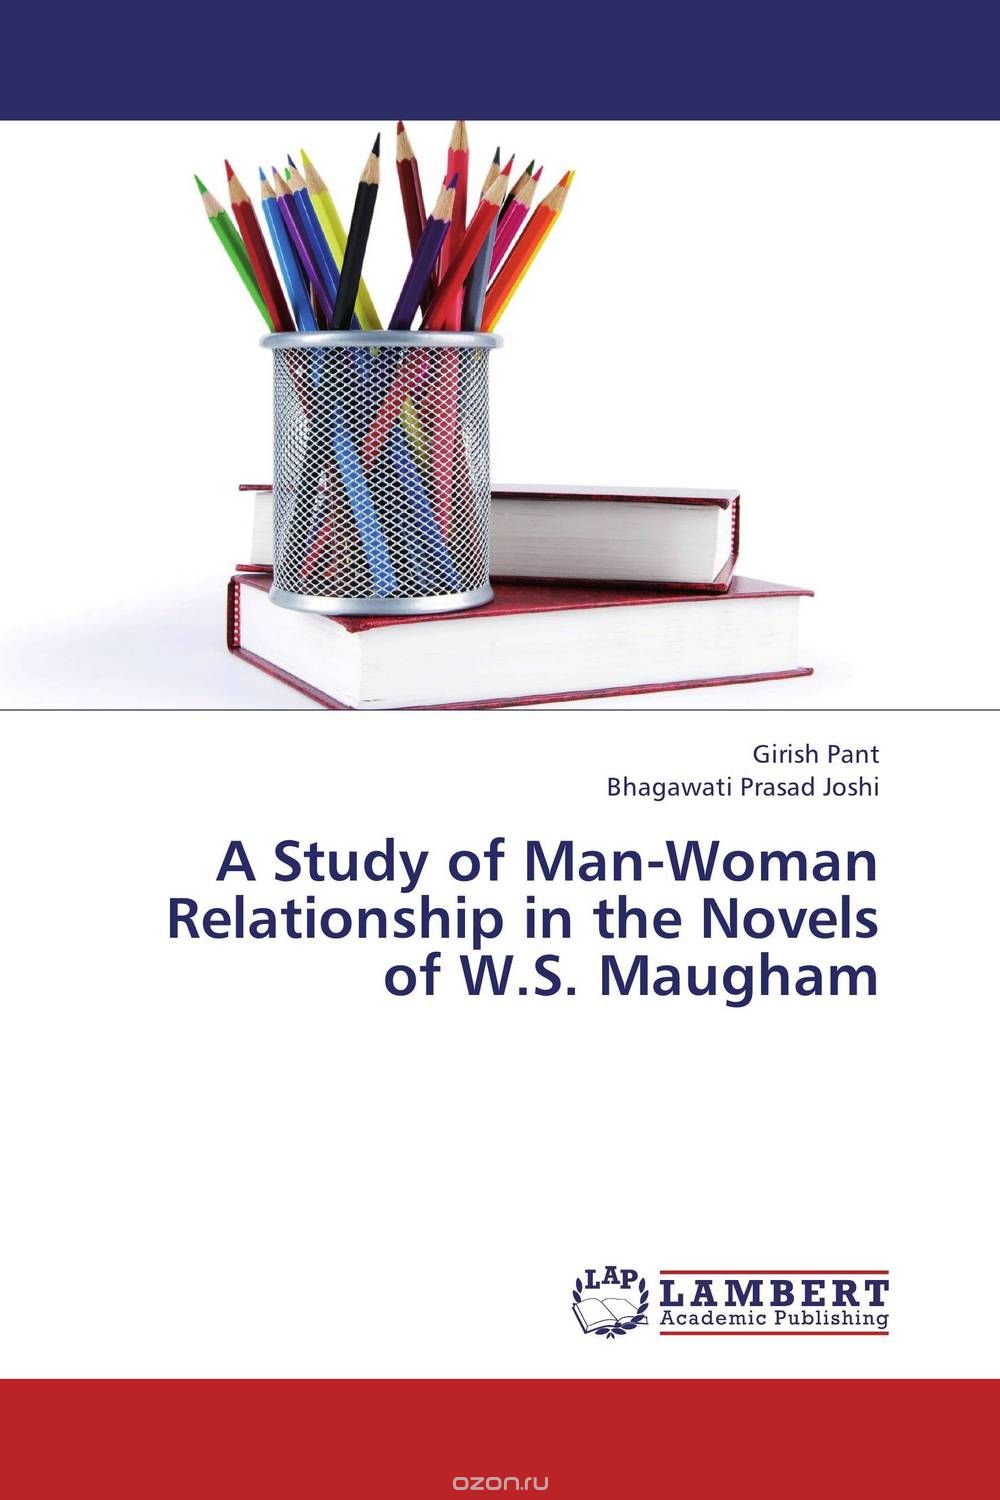 Скачать книгу "A Study of Man-Woman Relationship in the Novels of W.S. Maugham"